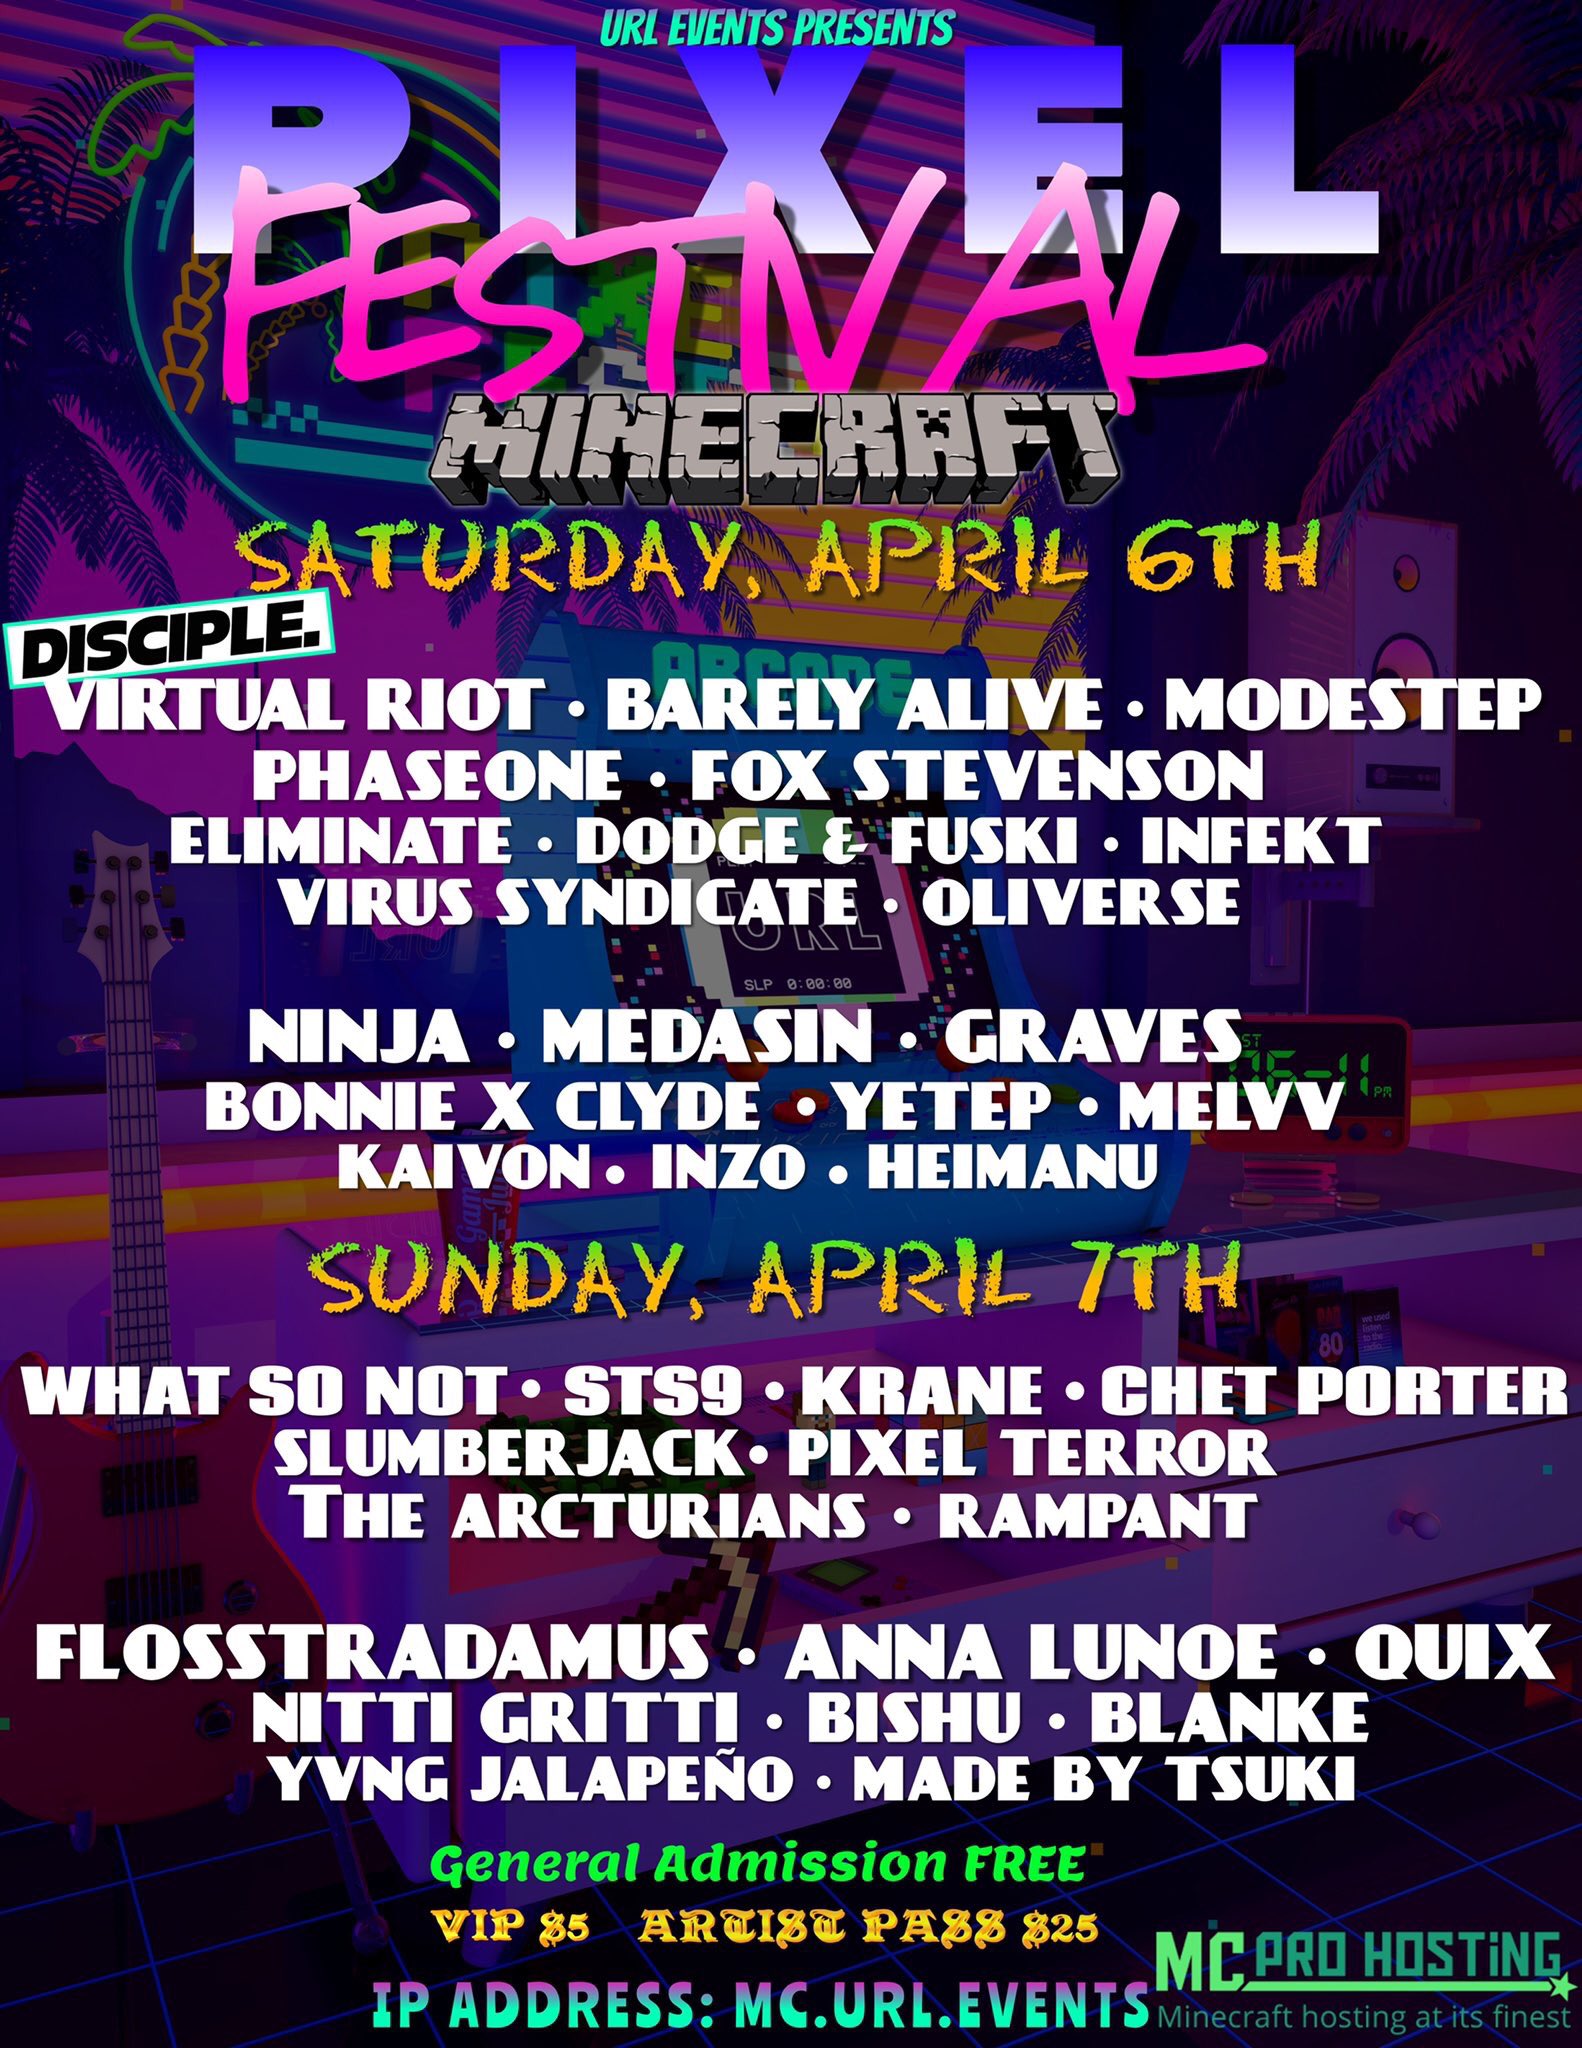 Mnn マインクラフトの世界で音楽フェス開催 Marshmelloがフォートナイトの世界で開いたバーチャルコンサートが話題となりましたが 4月6 7日にマインクラフト内で Pixel Festival が開催され Virtual Riot Barely Alive Modestep Ninja Medasin